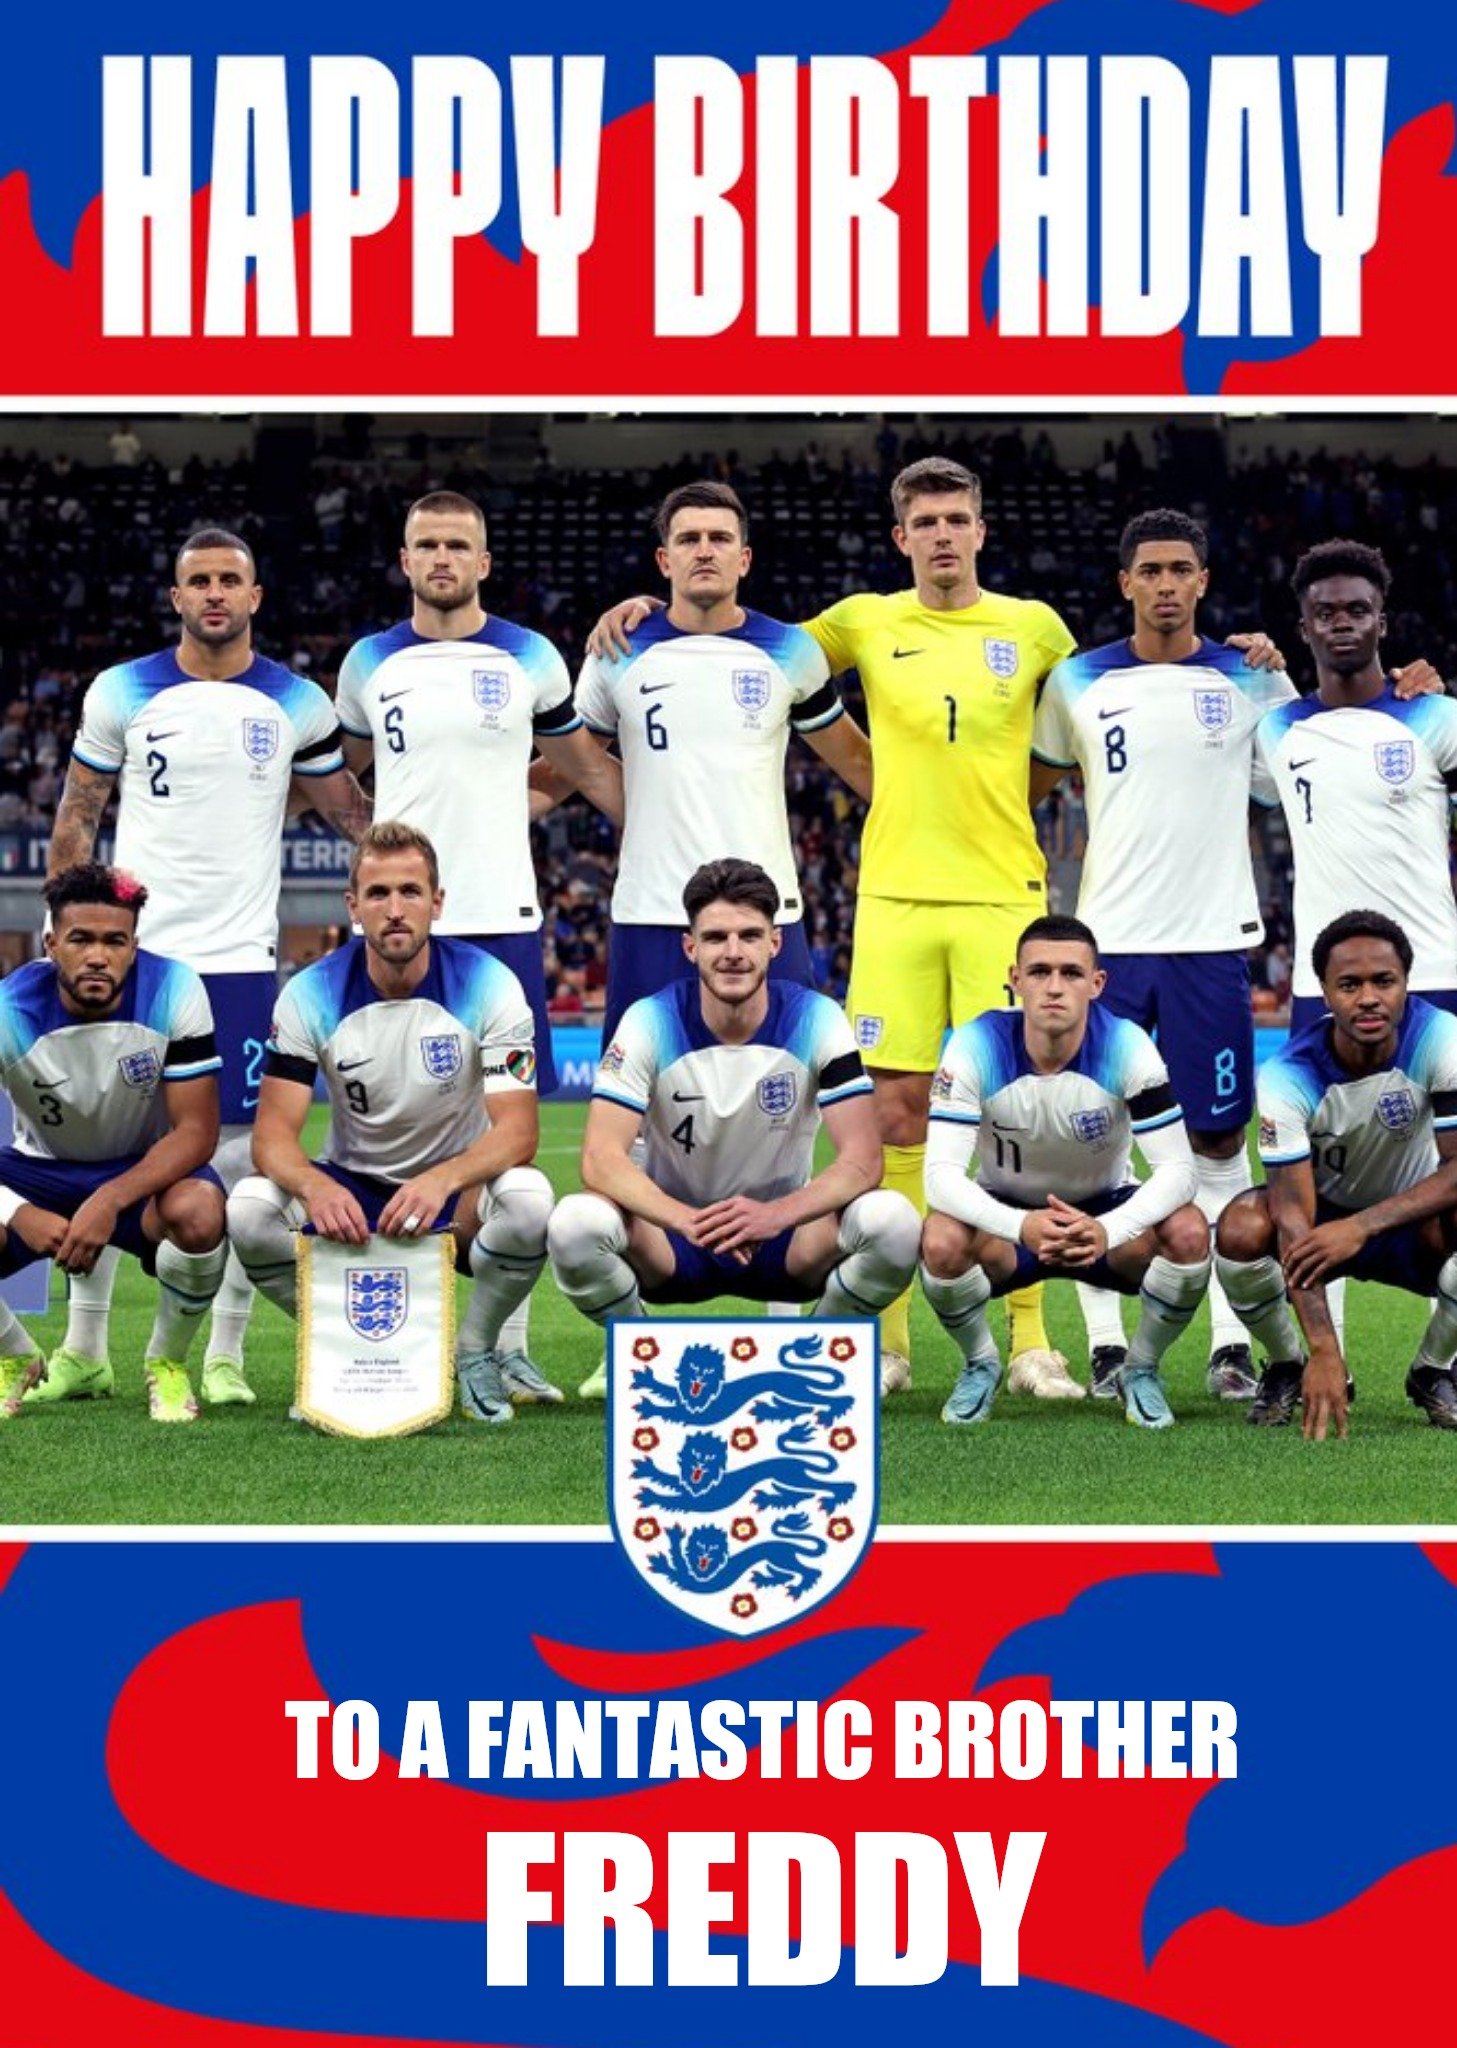 Moonpig Danilo England Football Team Photo Birthday Card Ecard